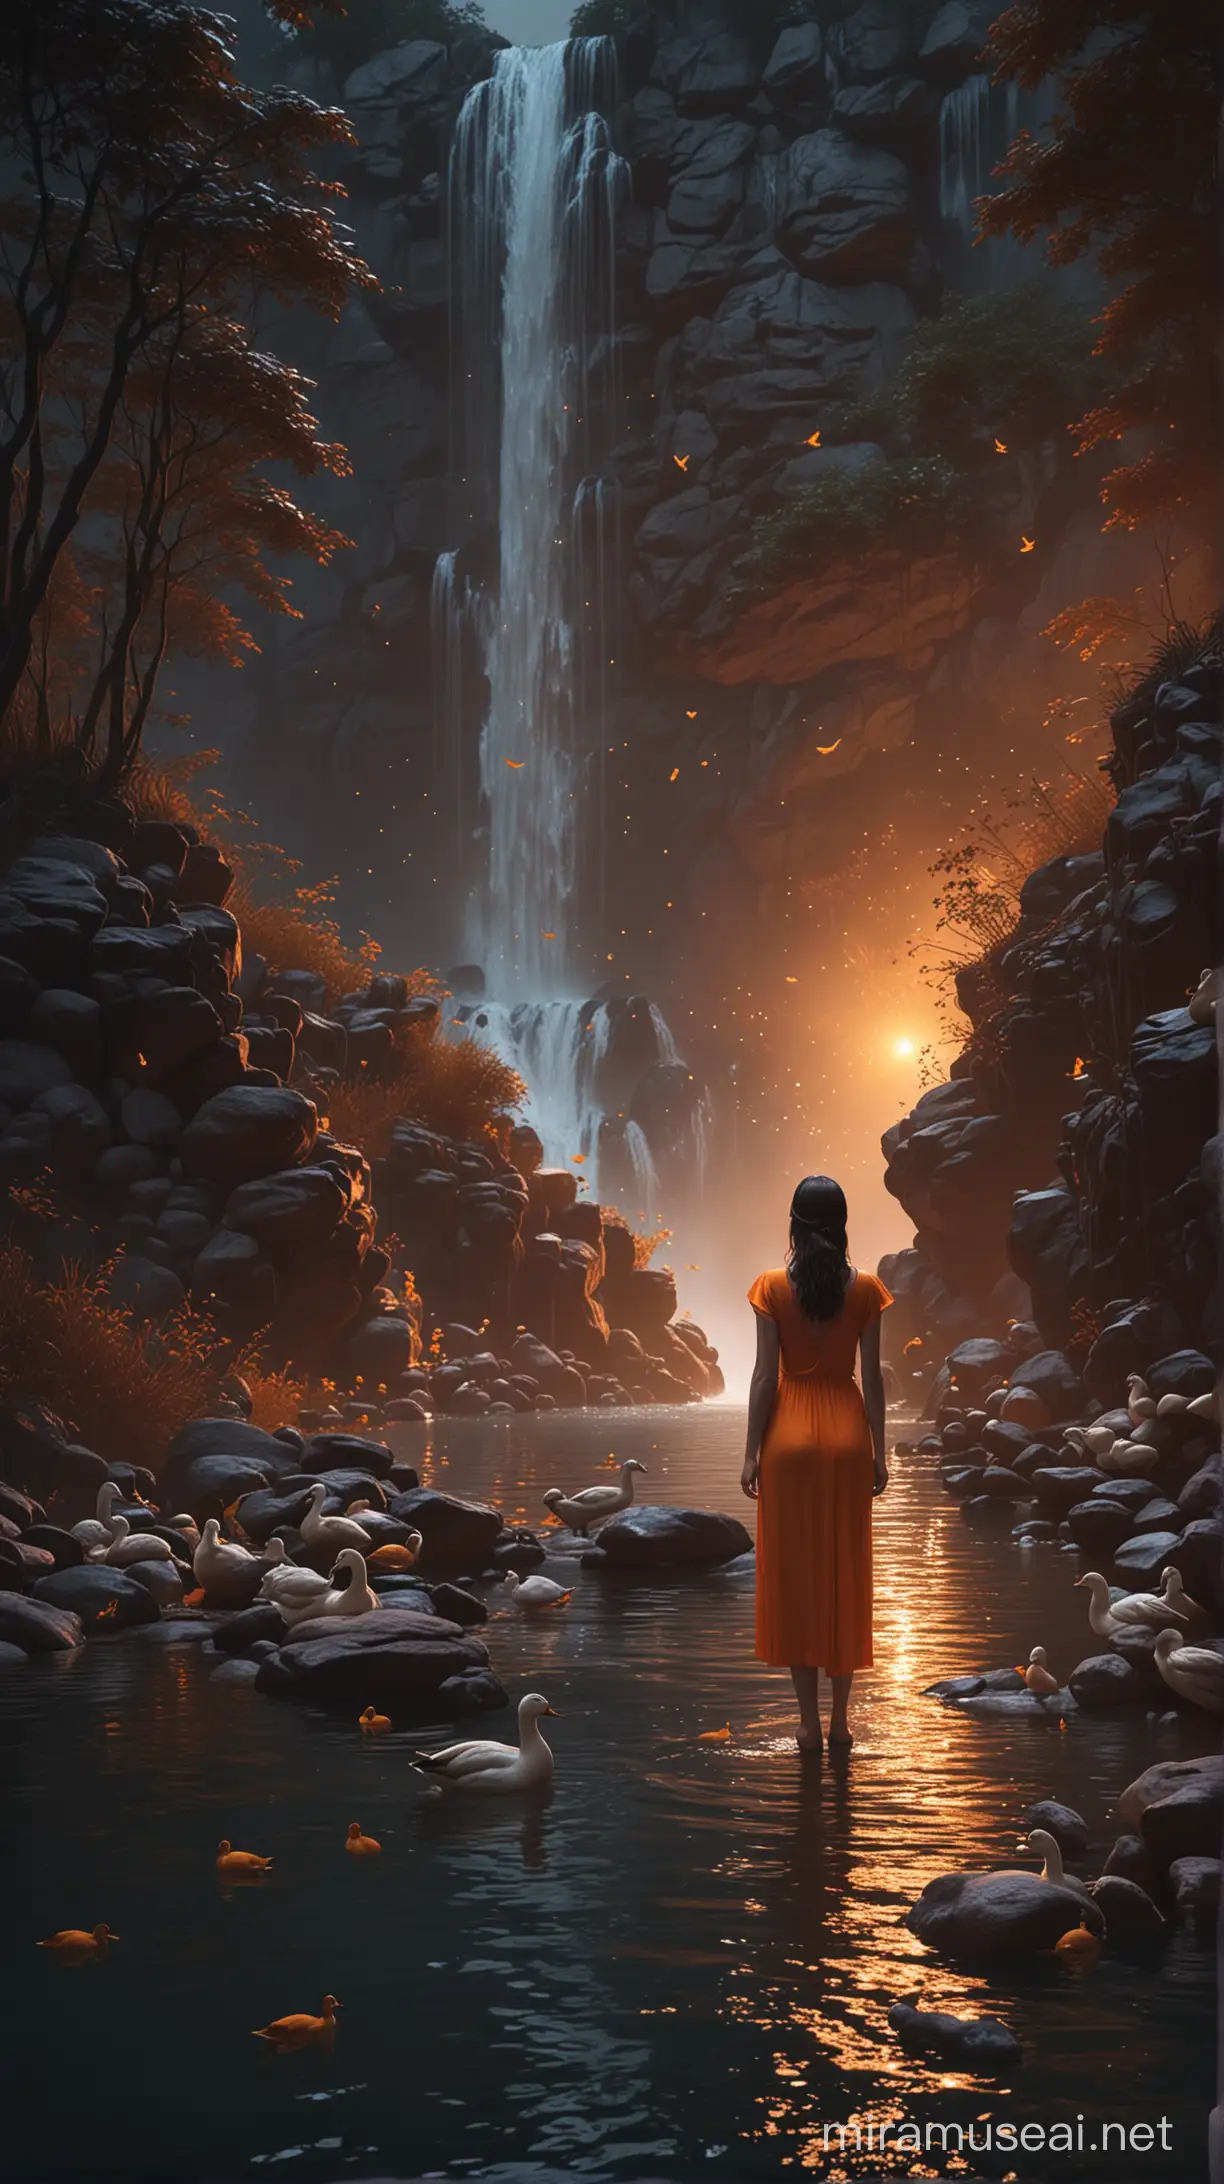 Stunning Midnight Waterfall Scene Minimalist Woman in Glittering Orange Gown Amidst Serene Ducks